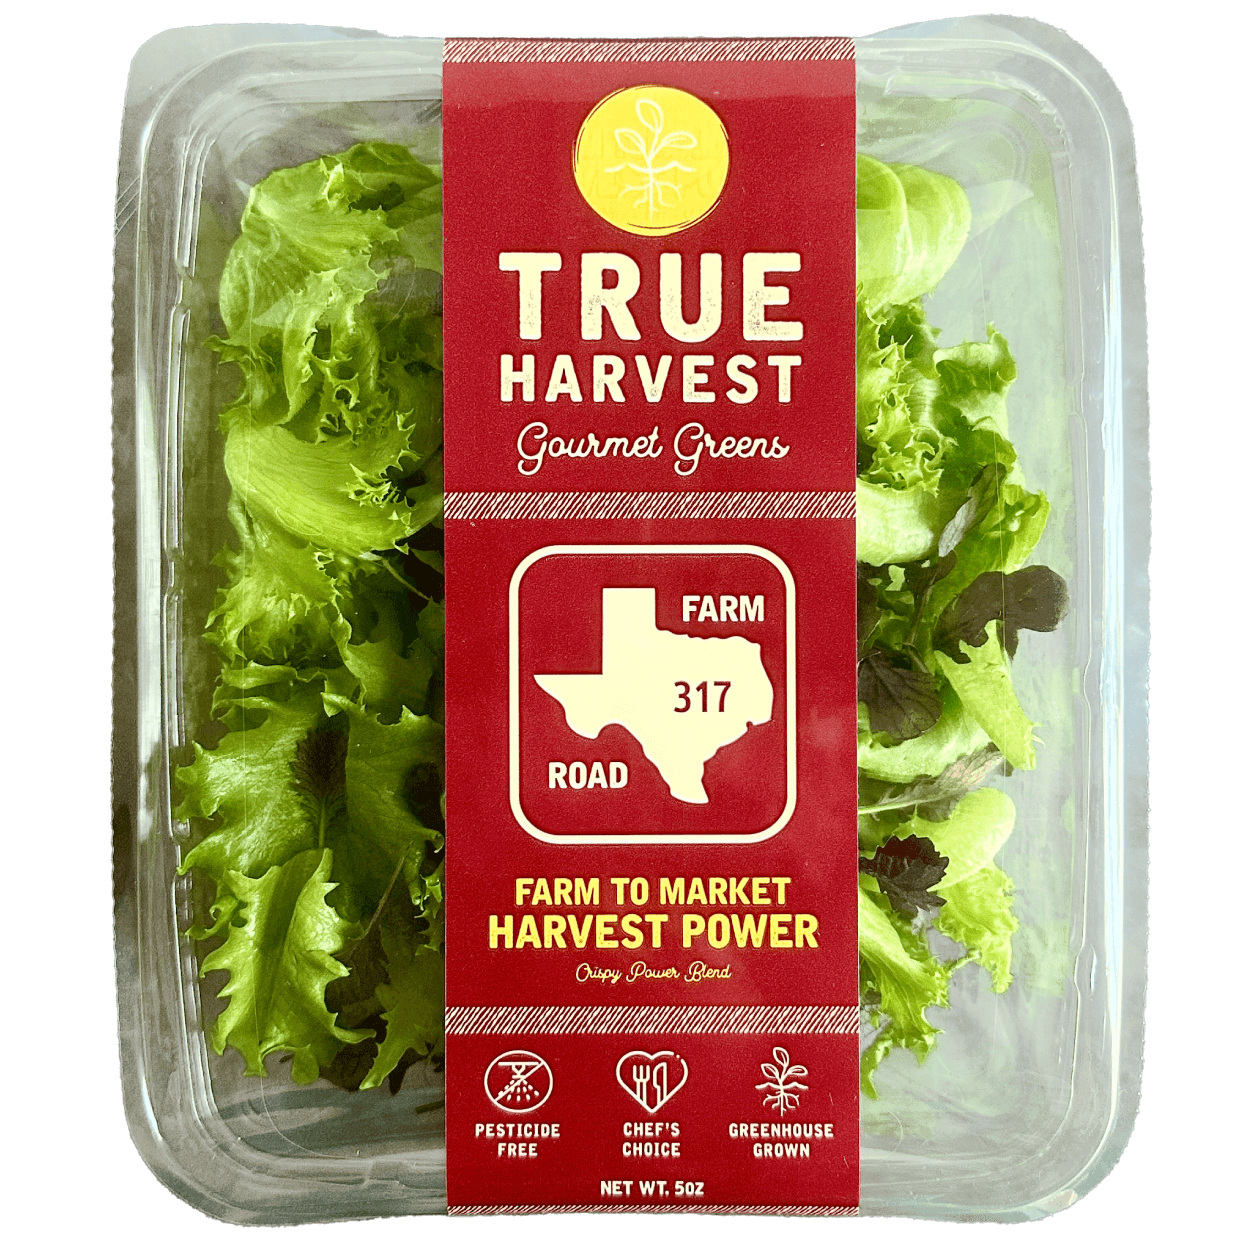 TrueHarvest Farms gourmet greens farm to market Harvest Power clamshell packaging